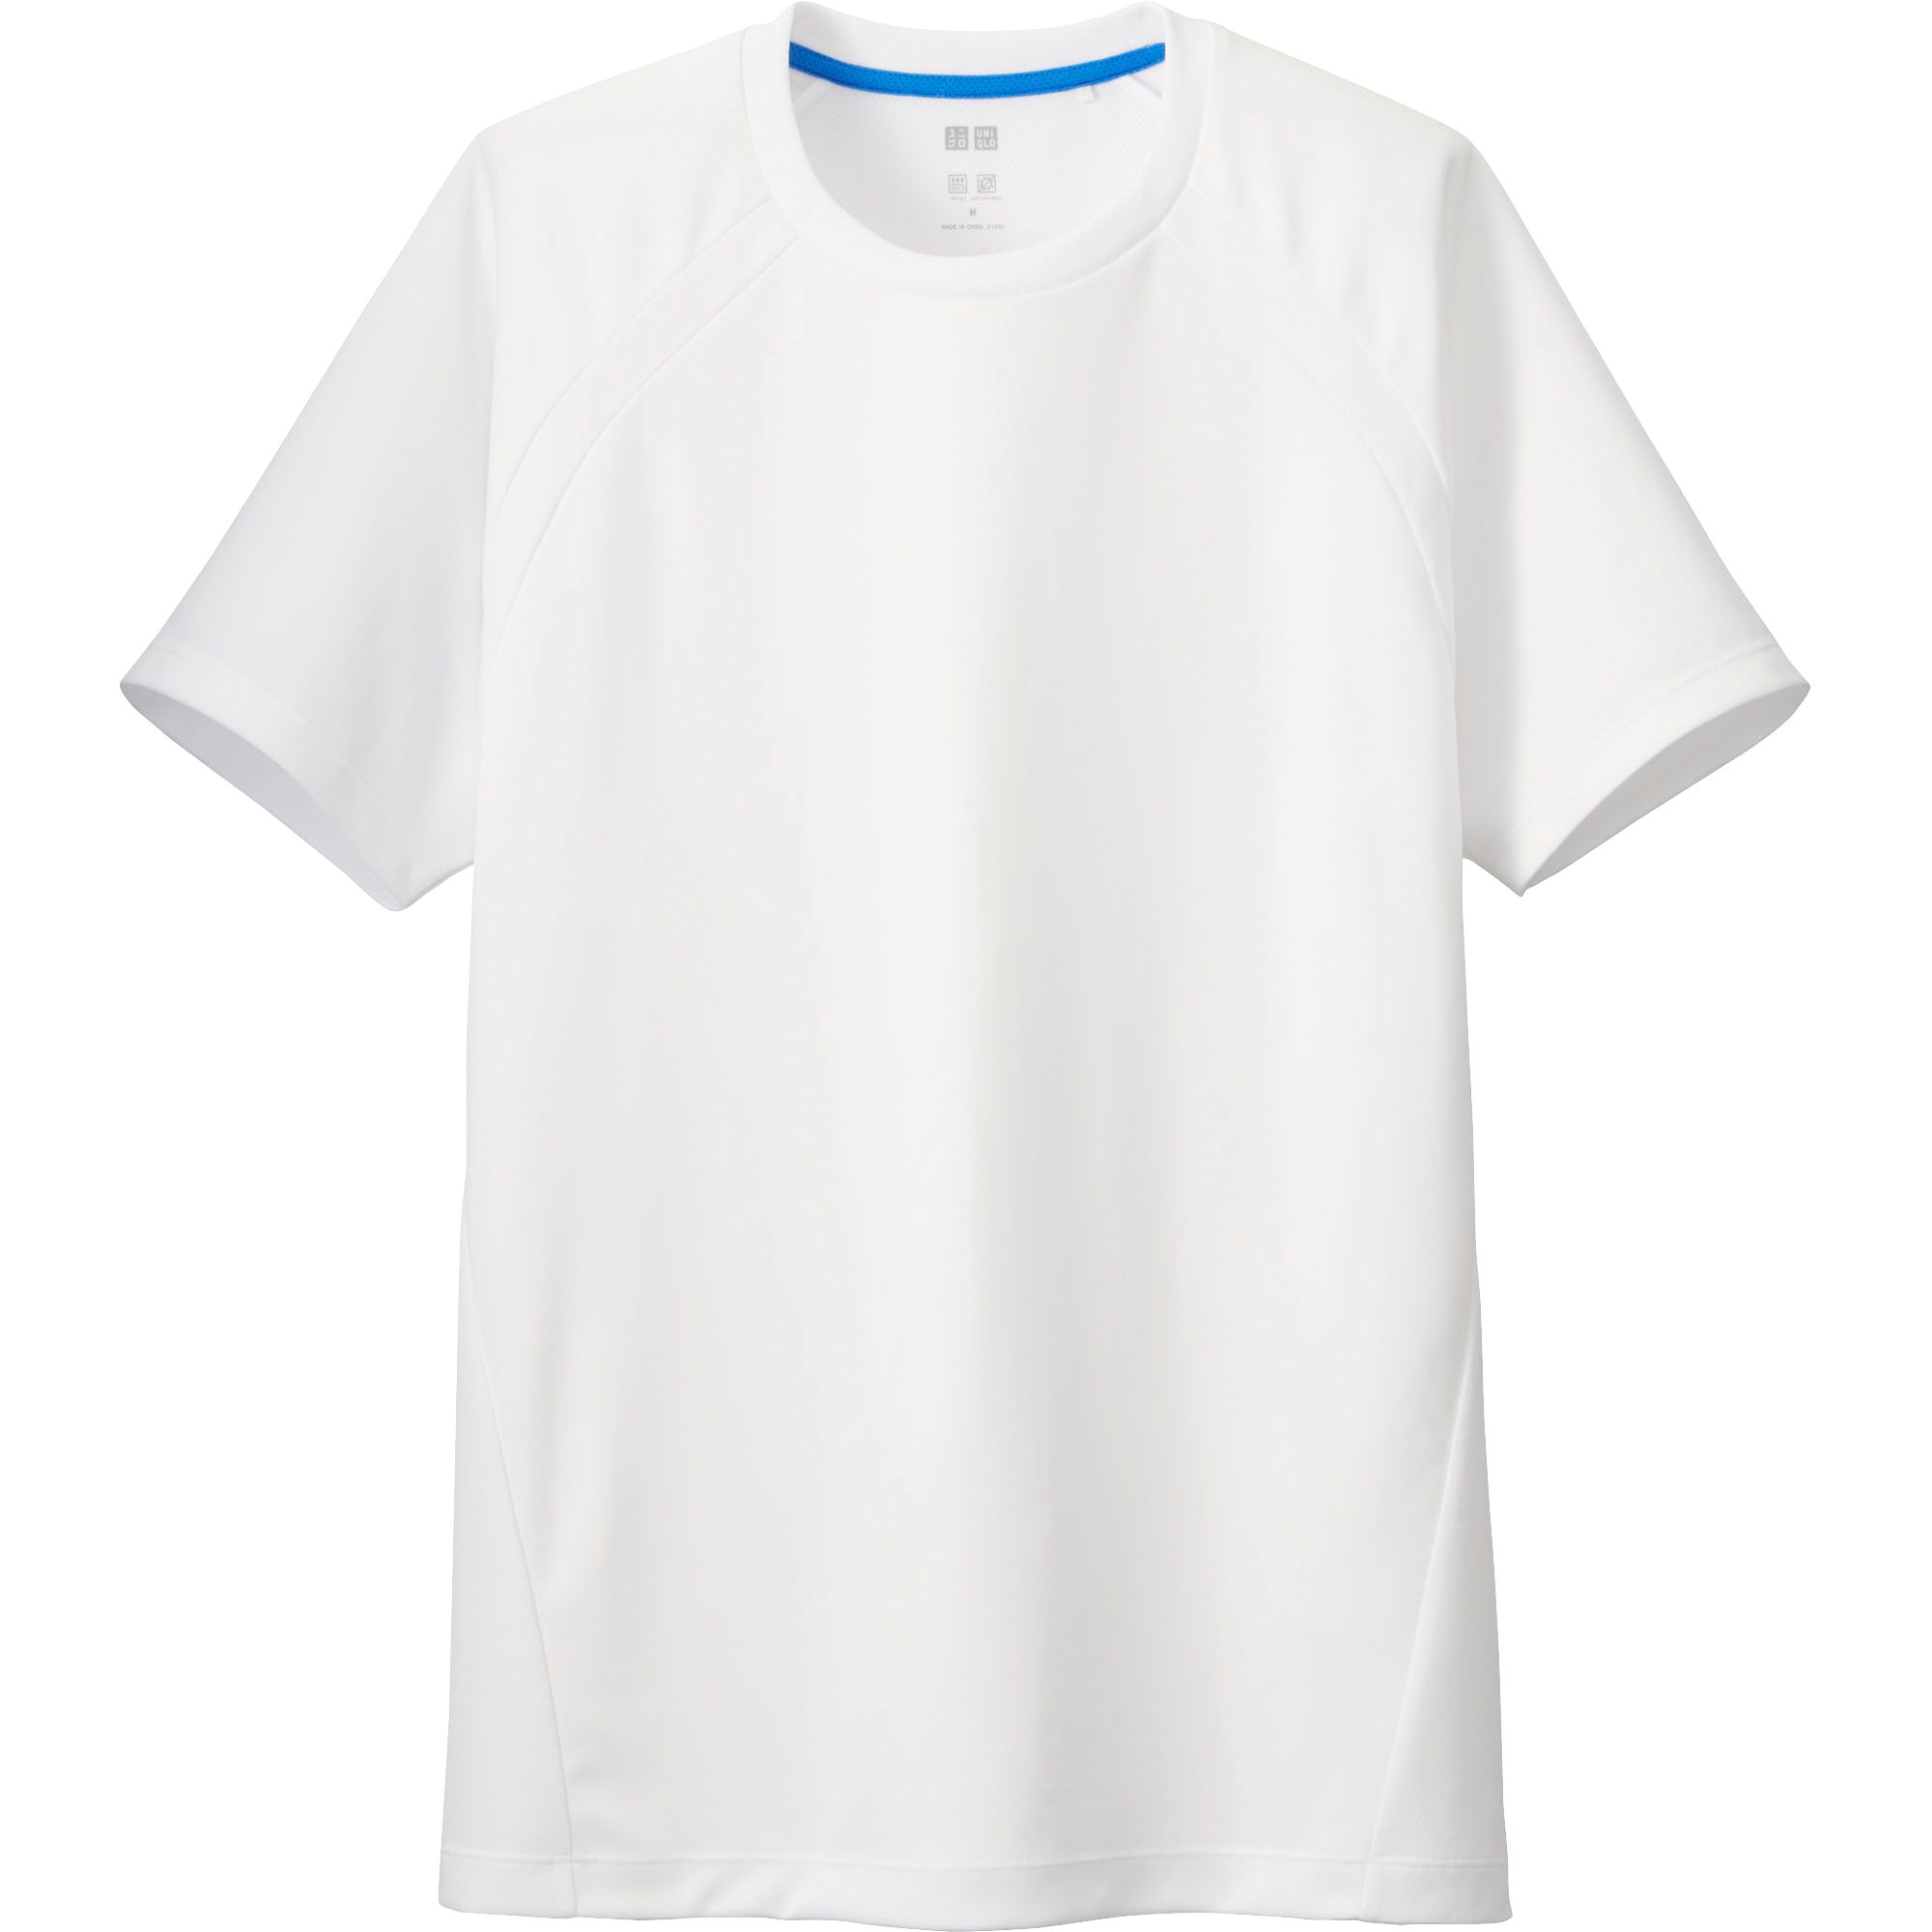 Uniqlo White Men's Dry Ex Crew Neck Short Sleeve T-Shirt